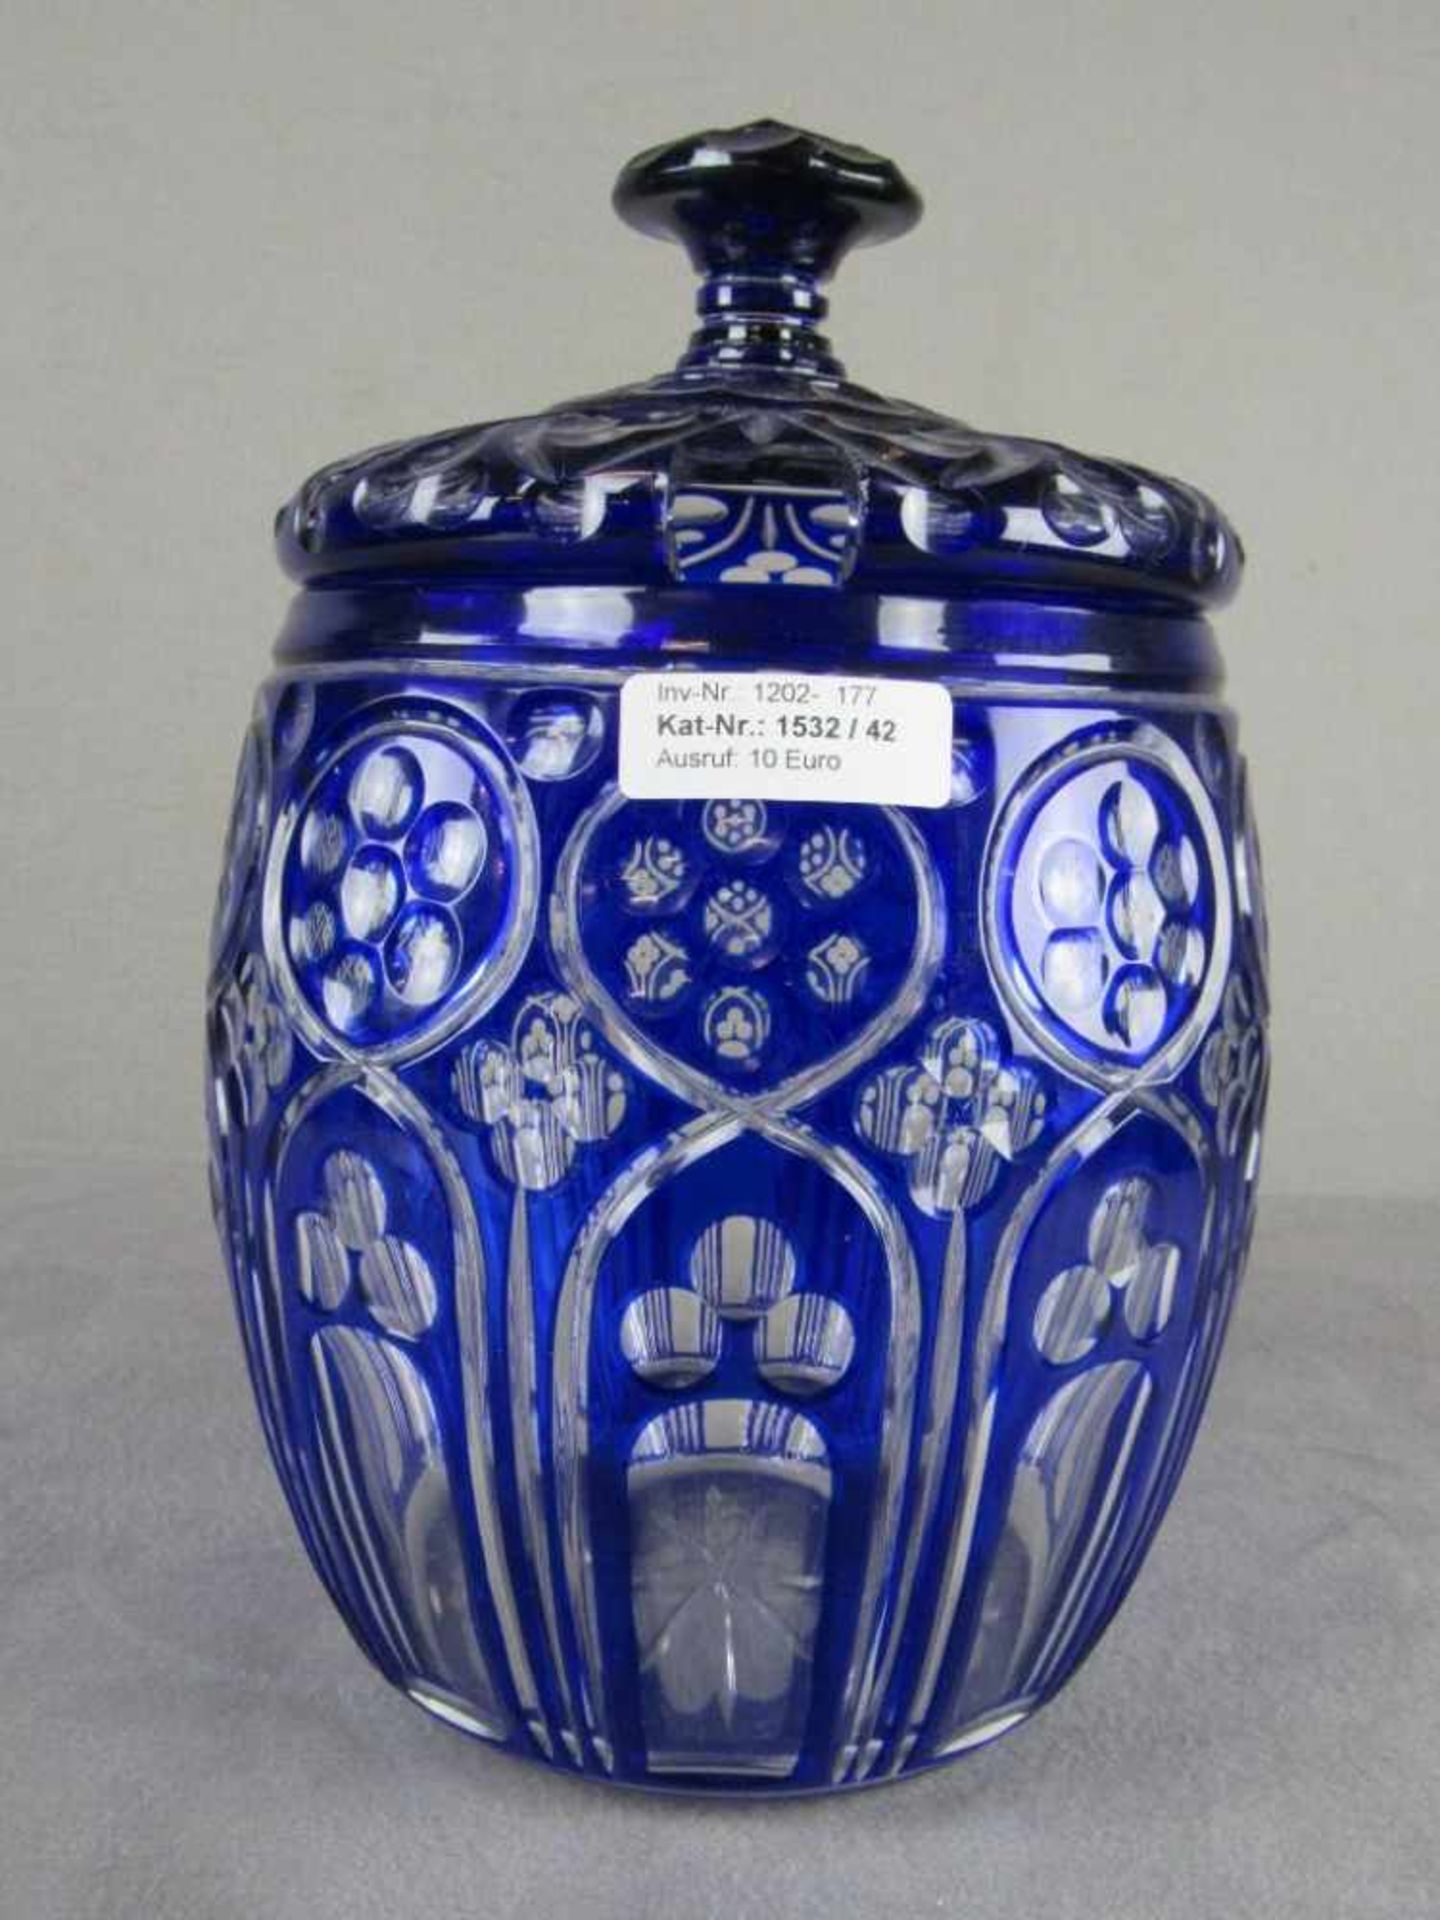 Große Bleiglasbowle blauklar ca.31cm hoch minimal gechipt- - -20.00 % buyer's premium on the